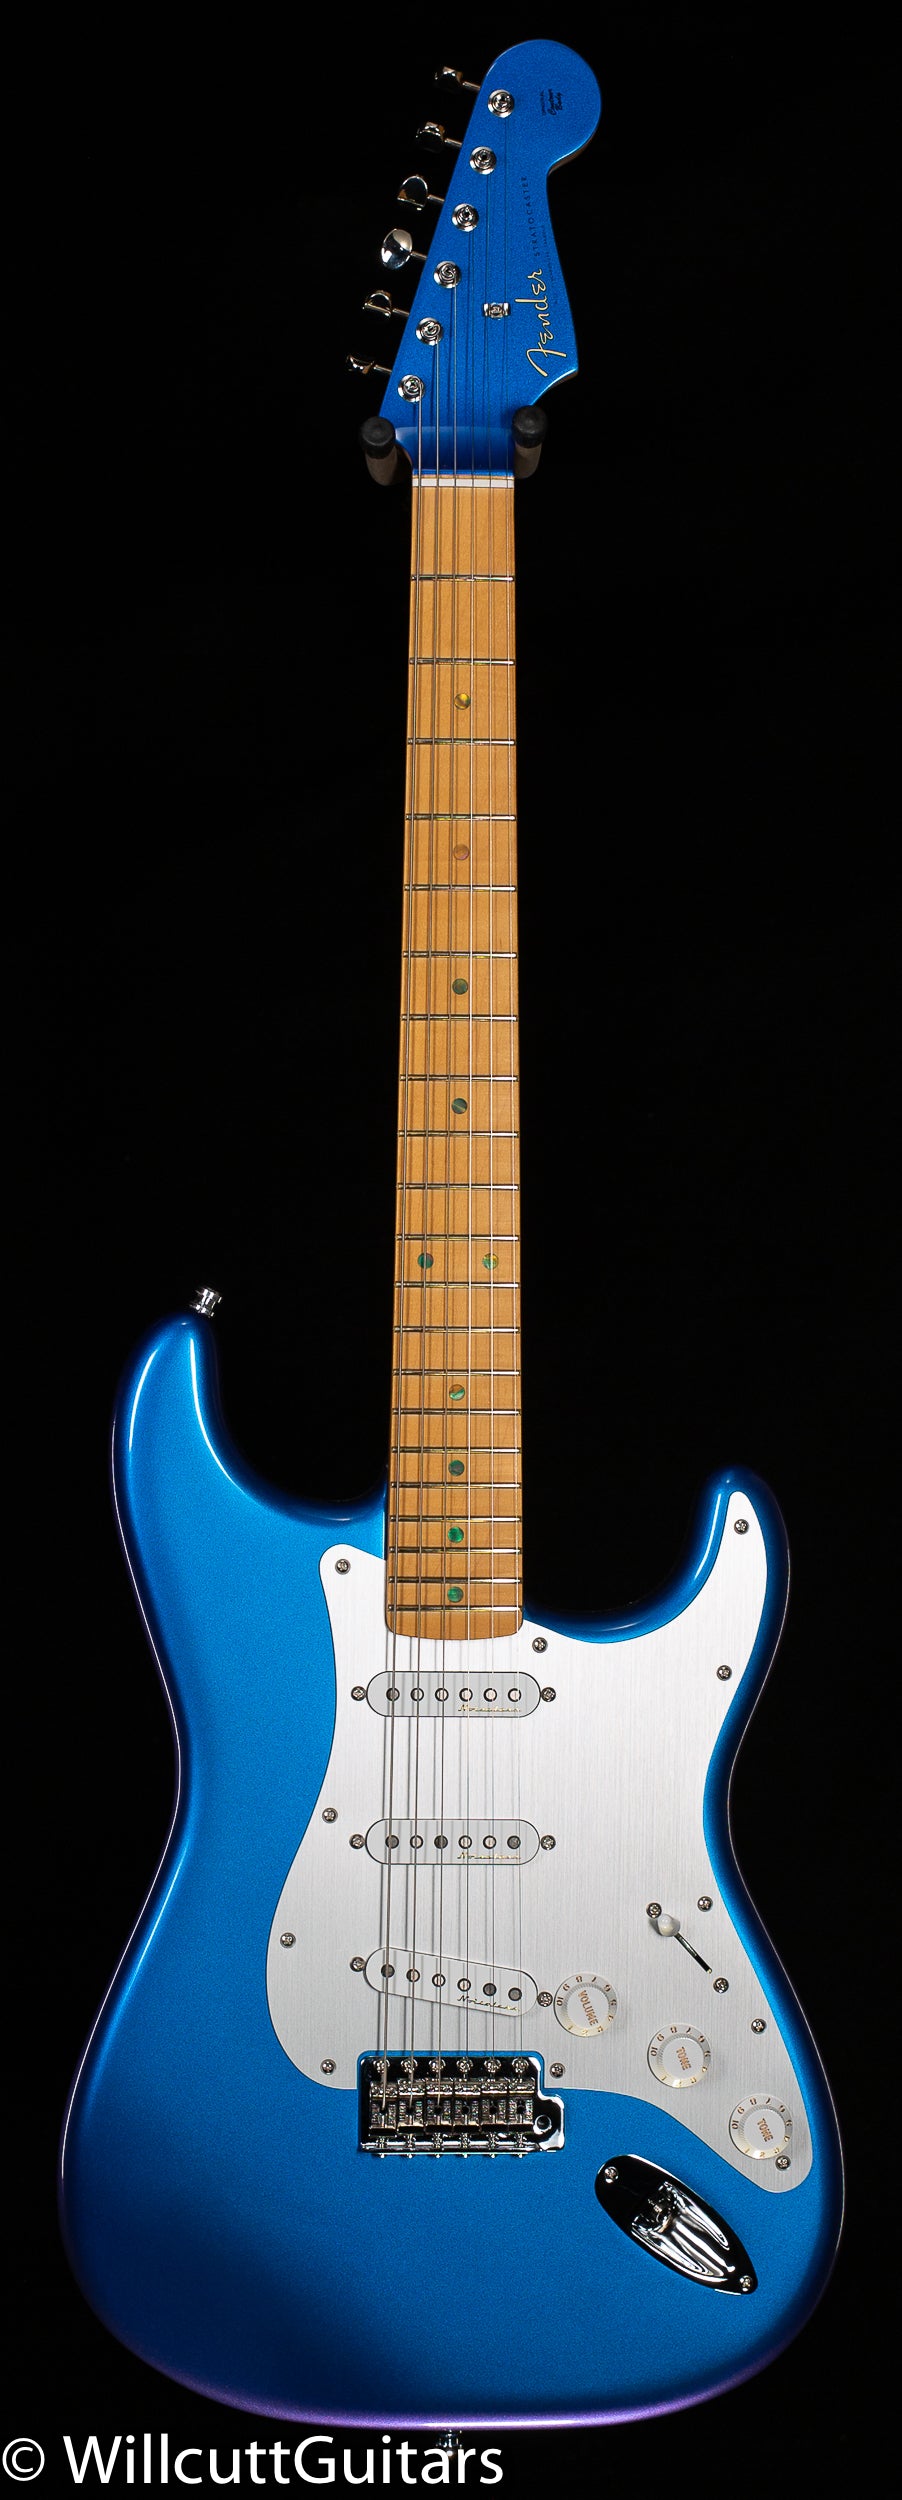 H.E.R. Stratocaster®